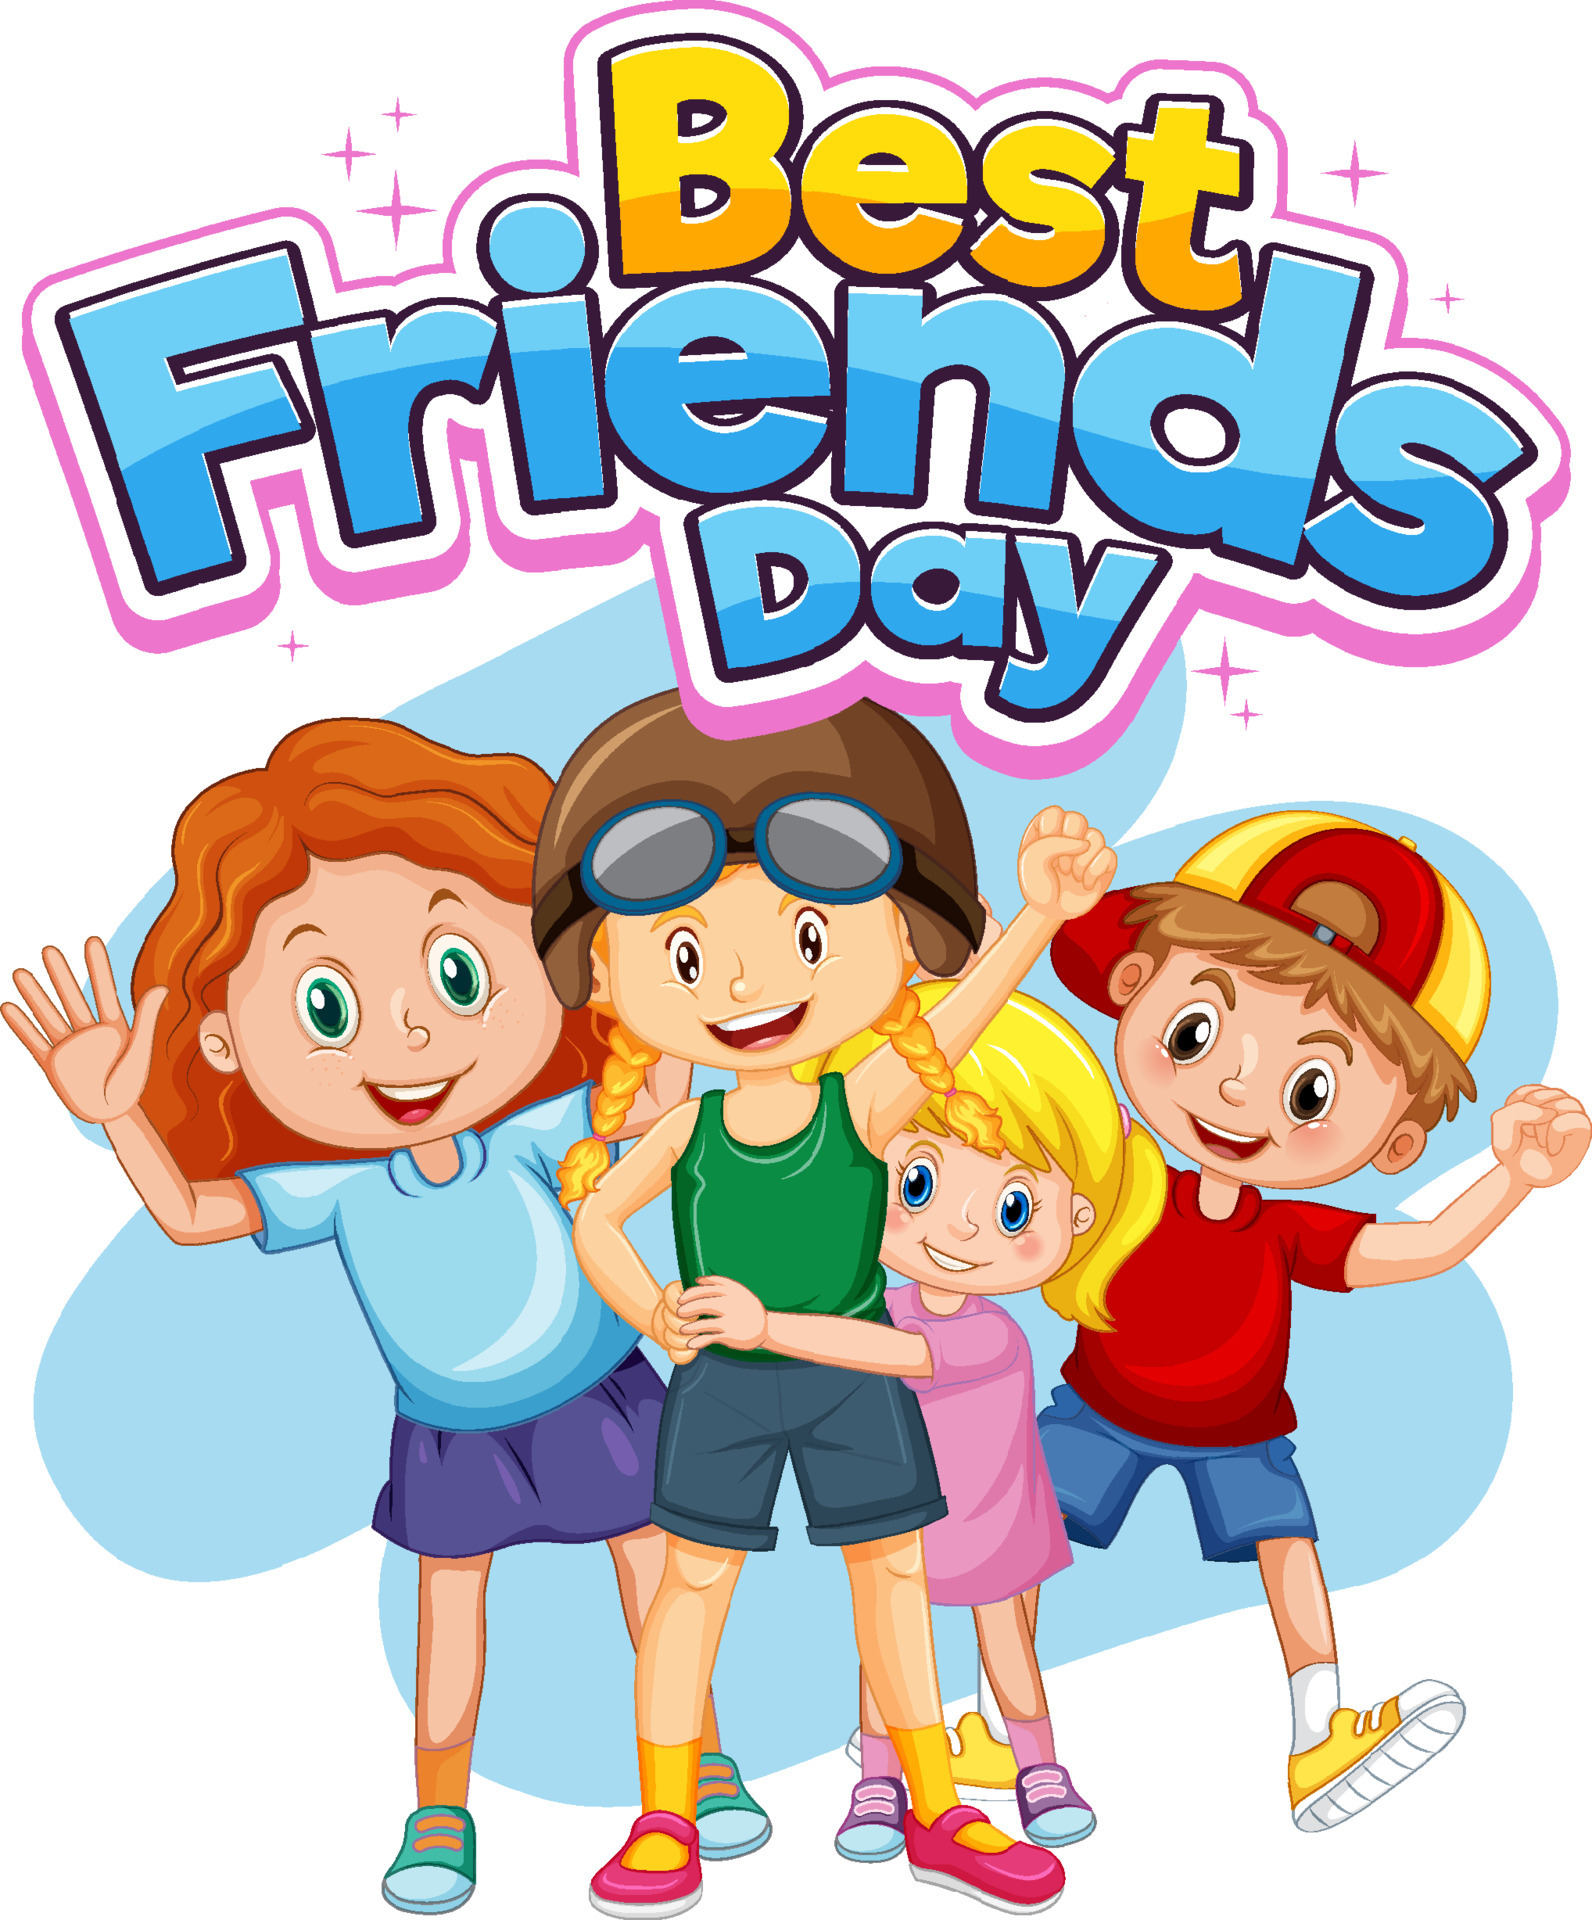 Best Friends Day logo banner with children in cartoon style 6094702 Vector  Art at Vecteezy